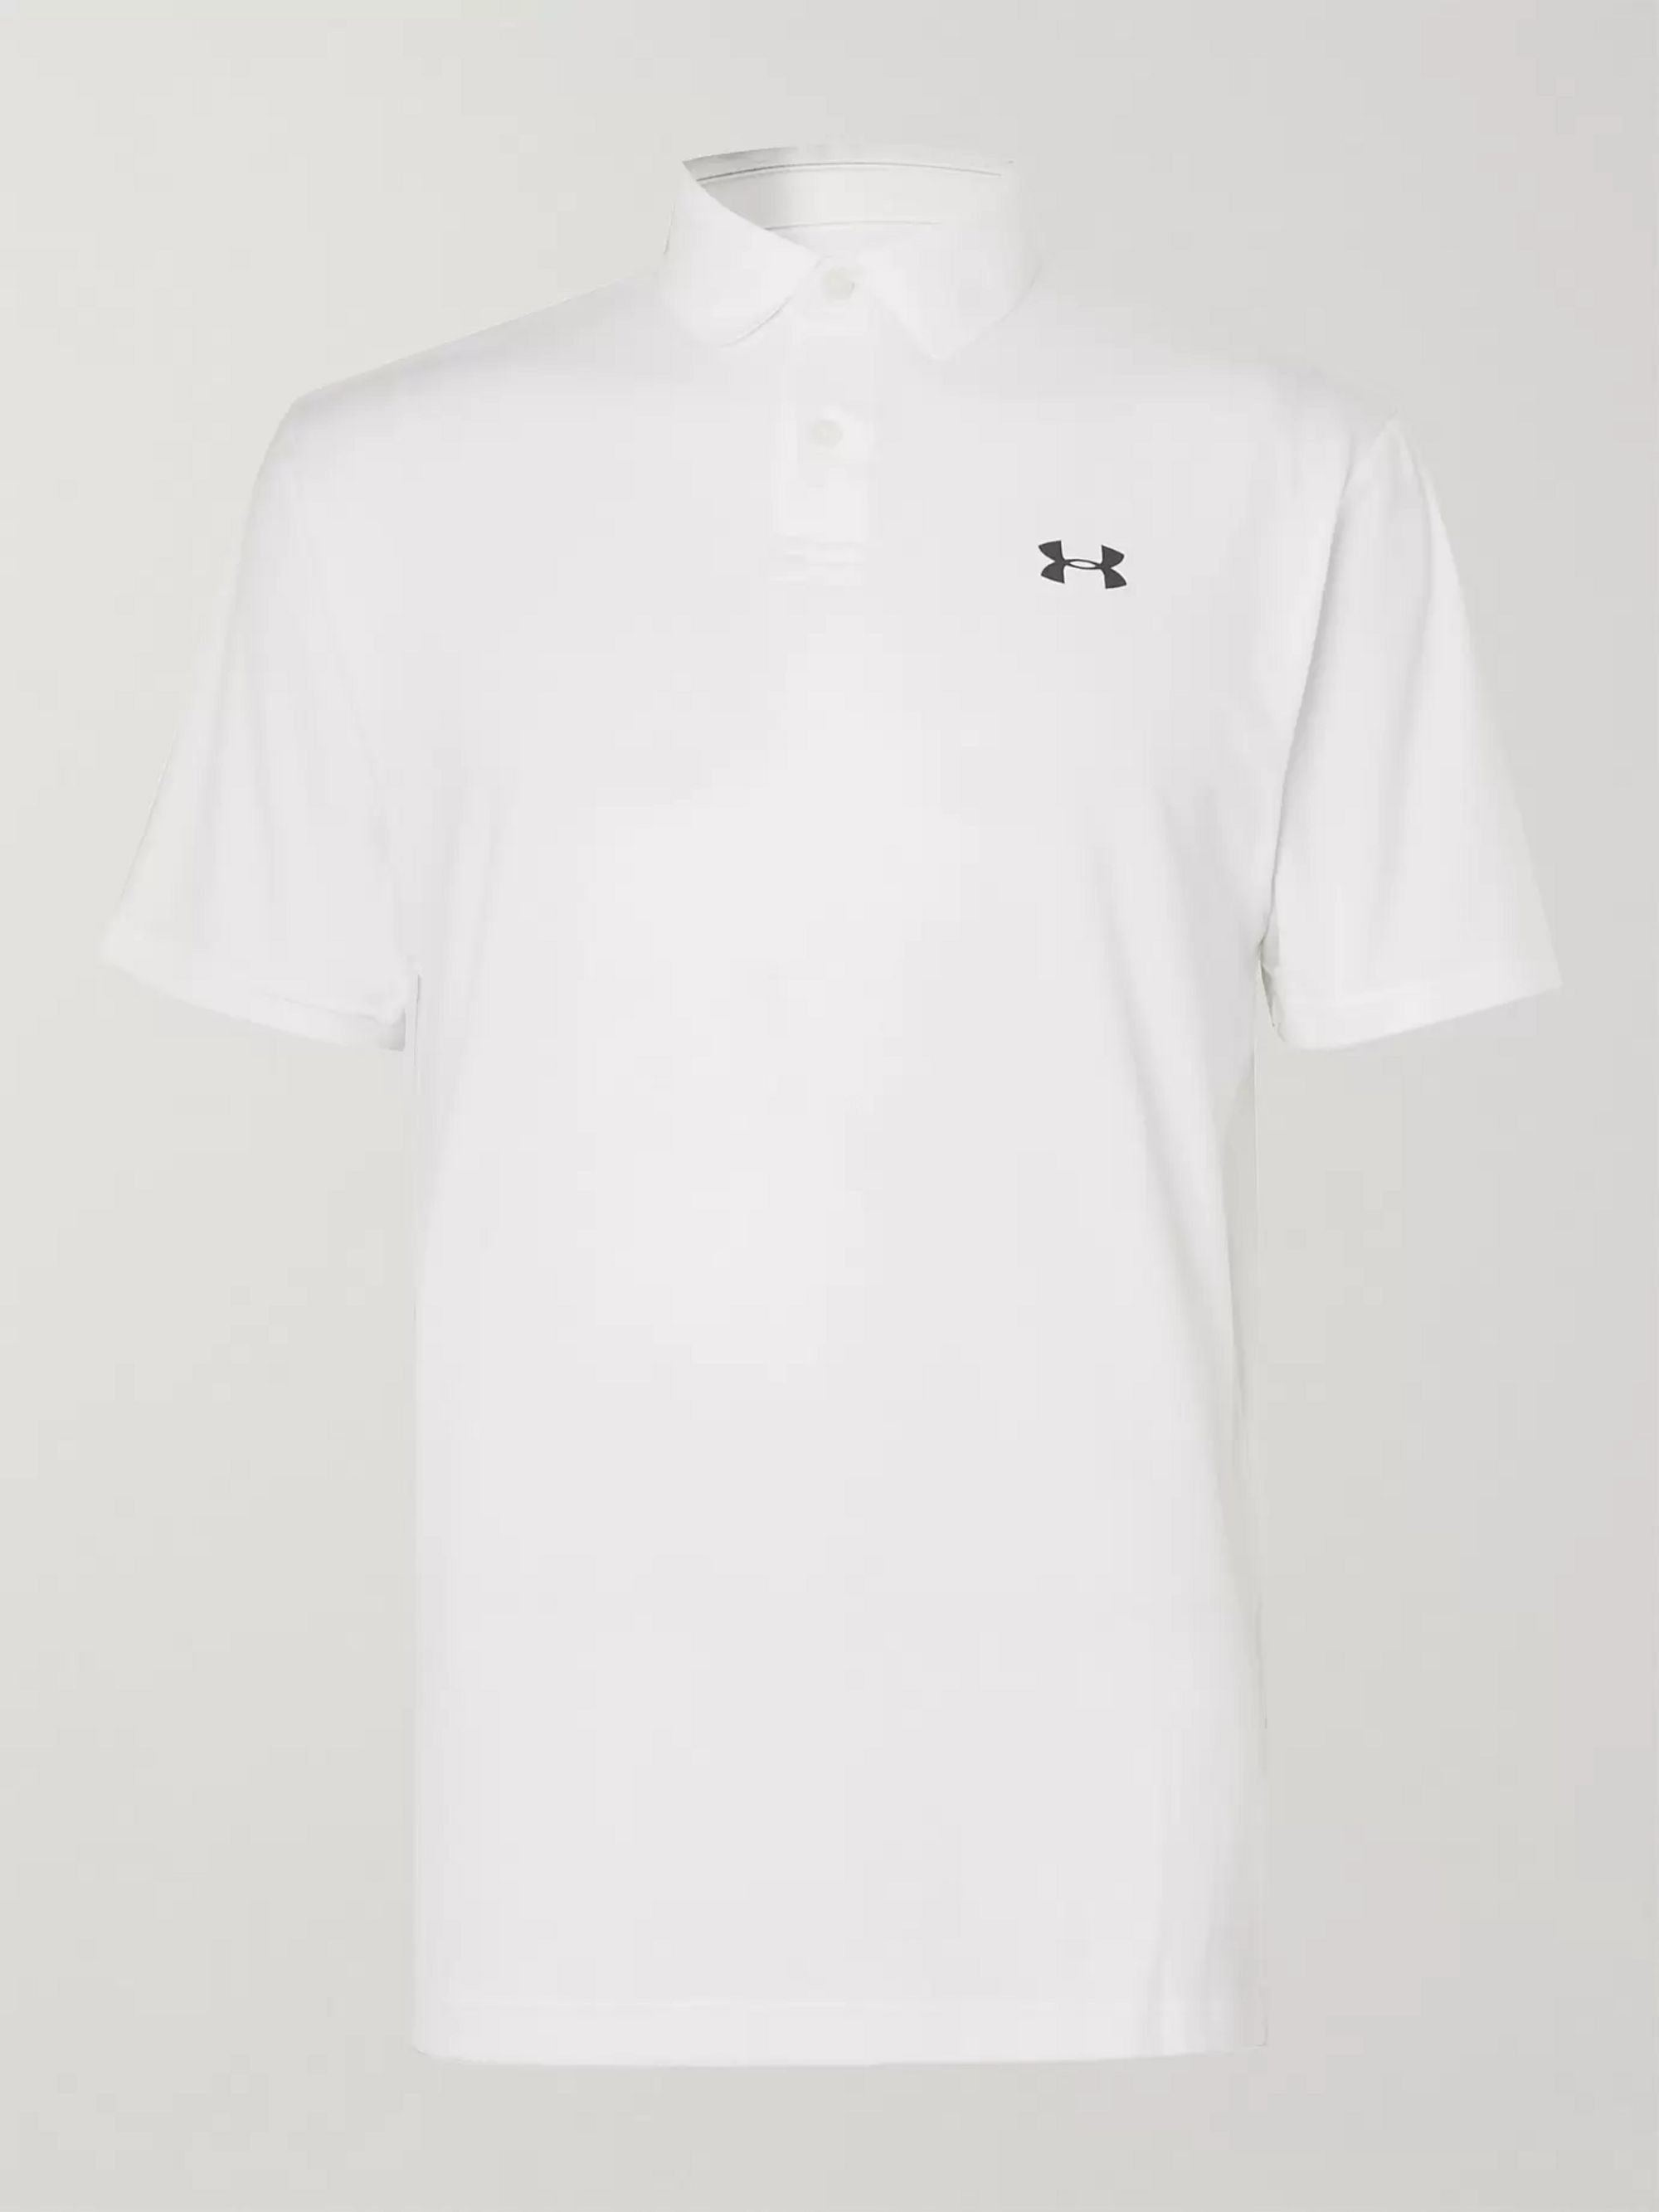 Golf Polo Shirt | Under Armour | MR PORTER